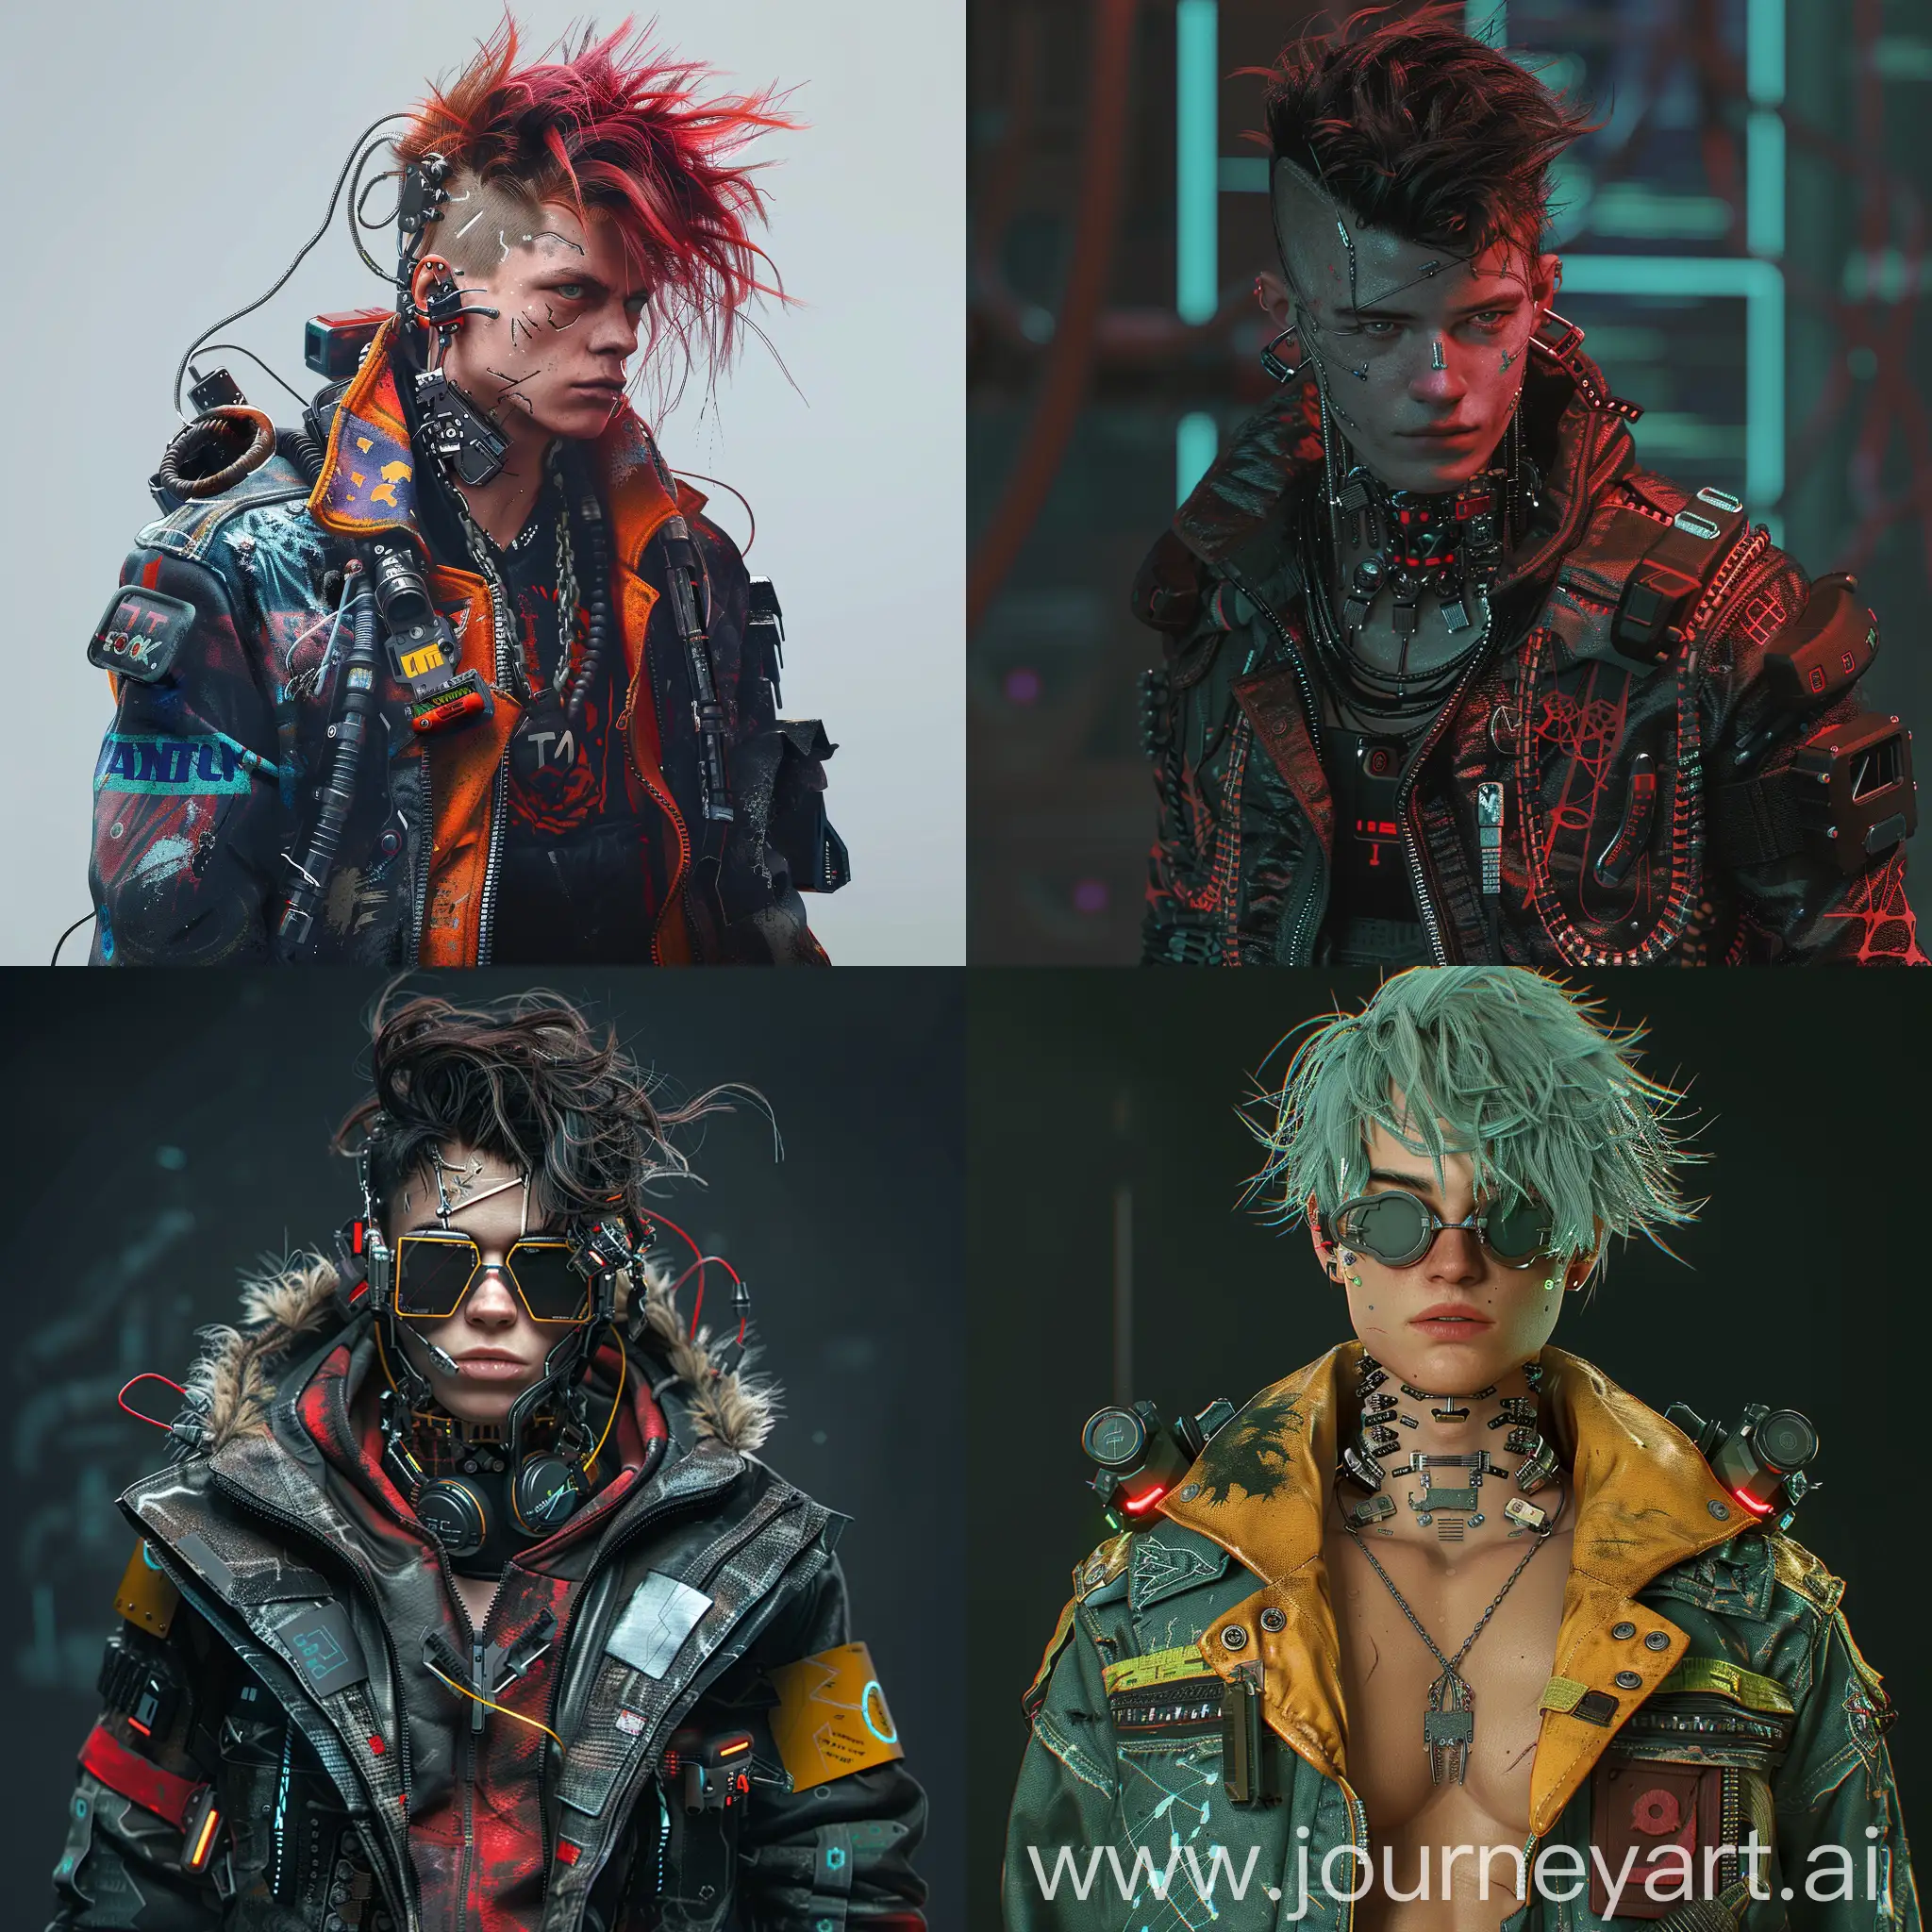 Cyberpunk-Rockerboy-Hacker-with-Futuristic-Grunge-Style-and-Implants